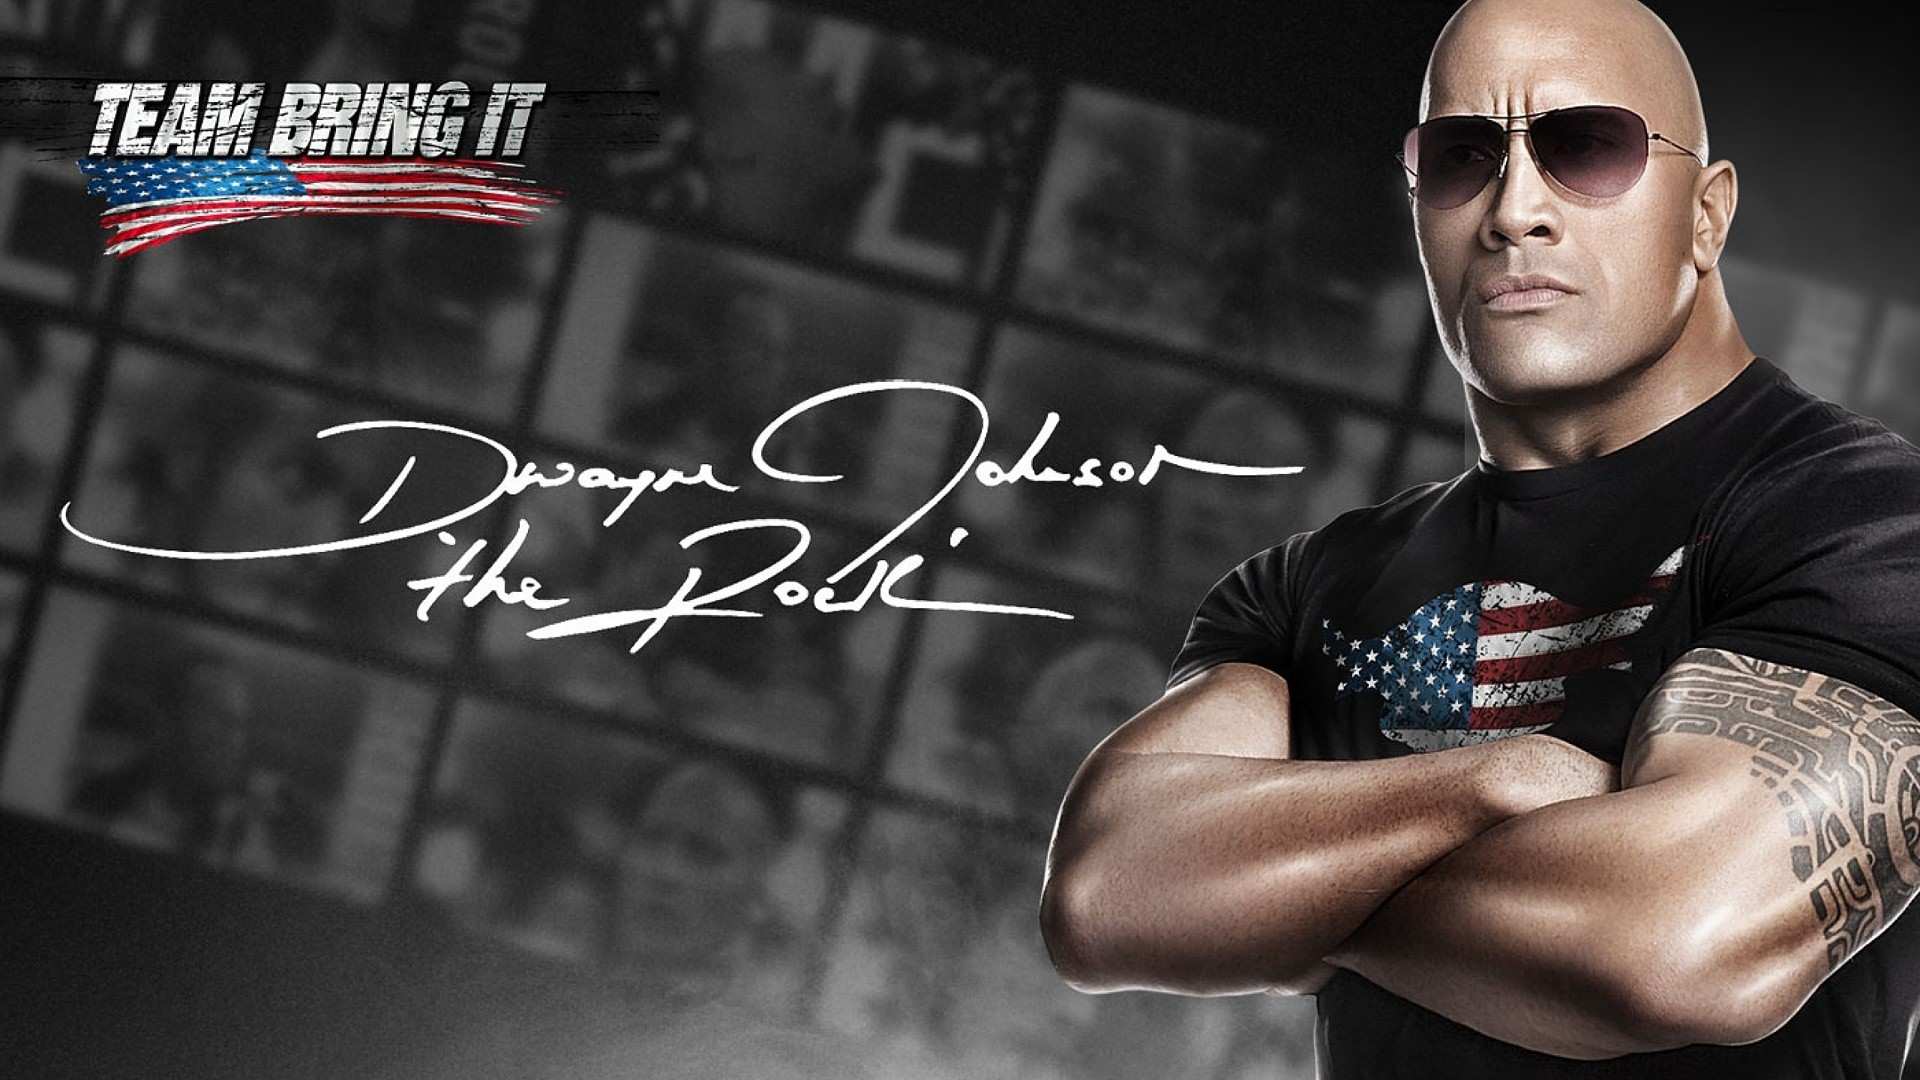 WWE The Rock Dwayne Johnson HD Wallpaper For Desktop